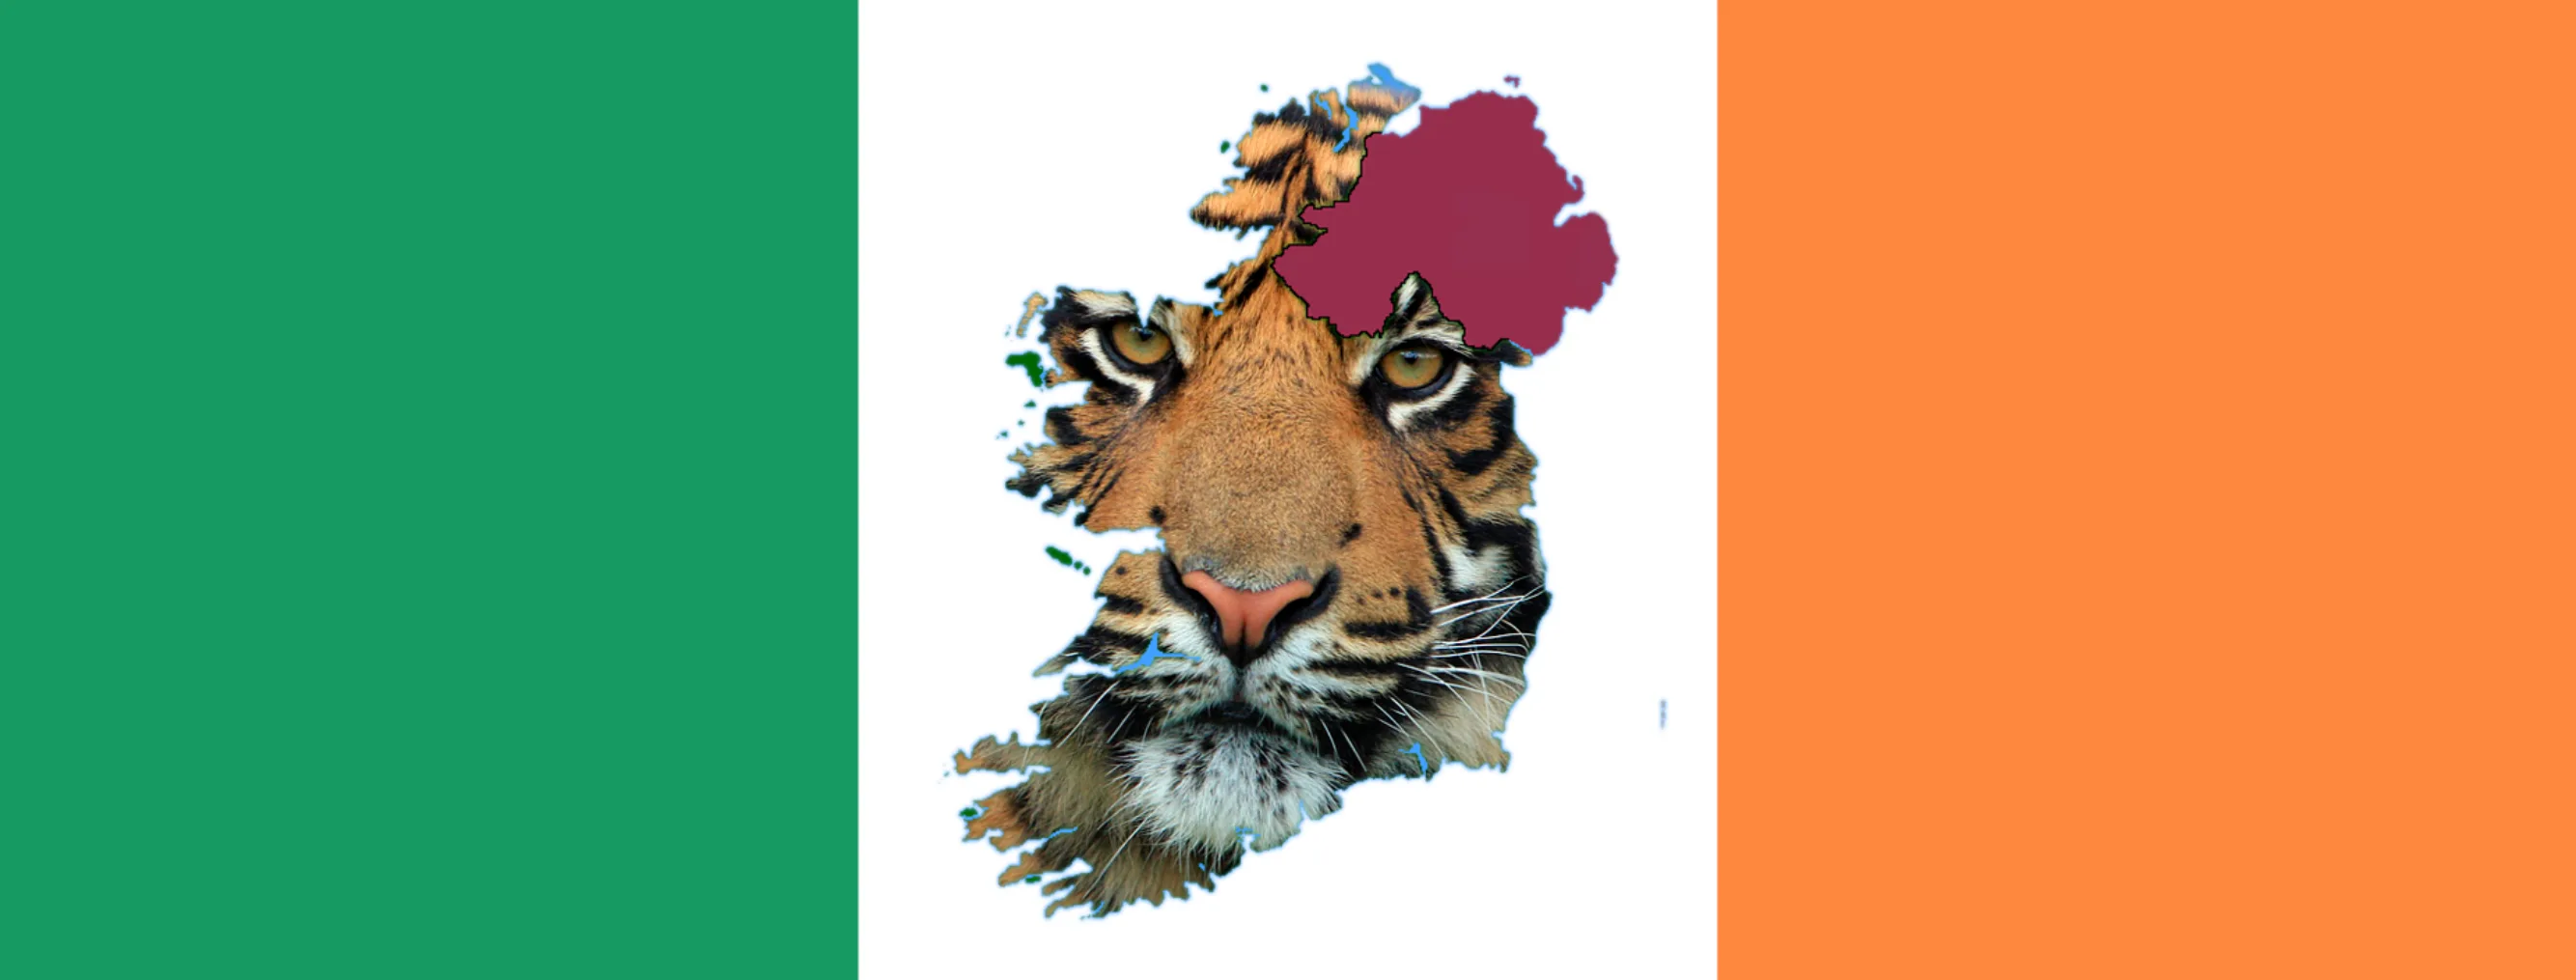 Celtic irland tiger